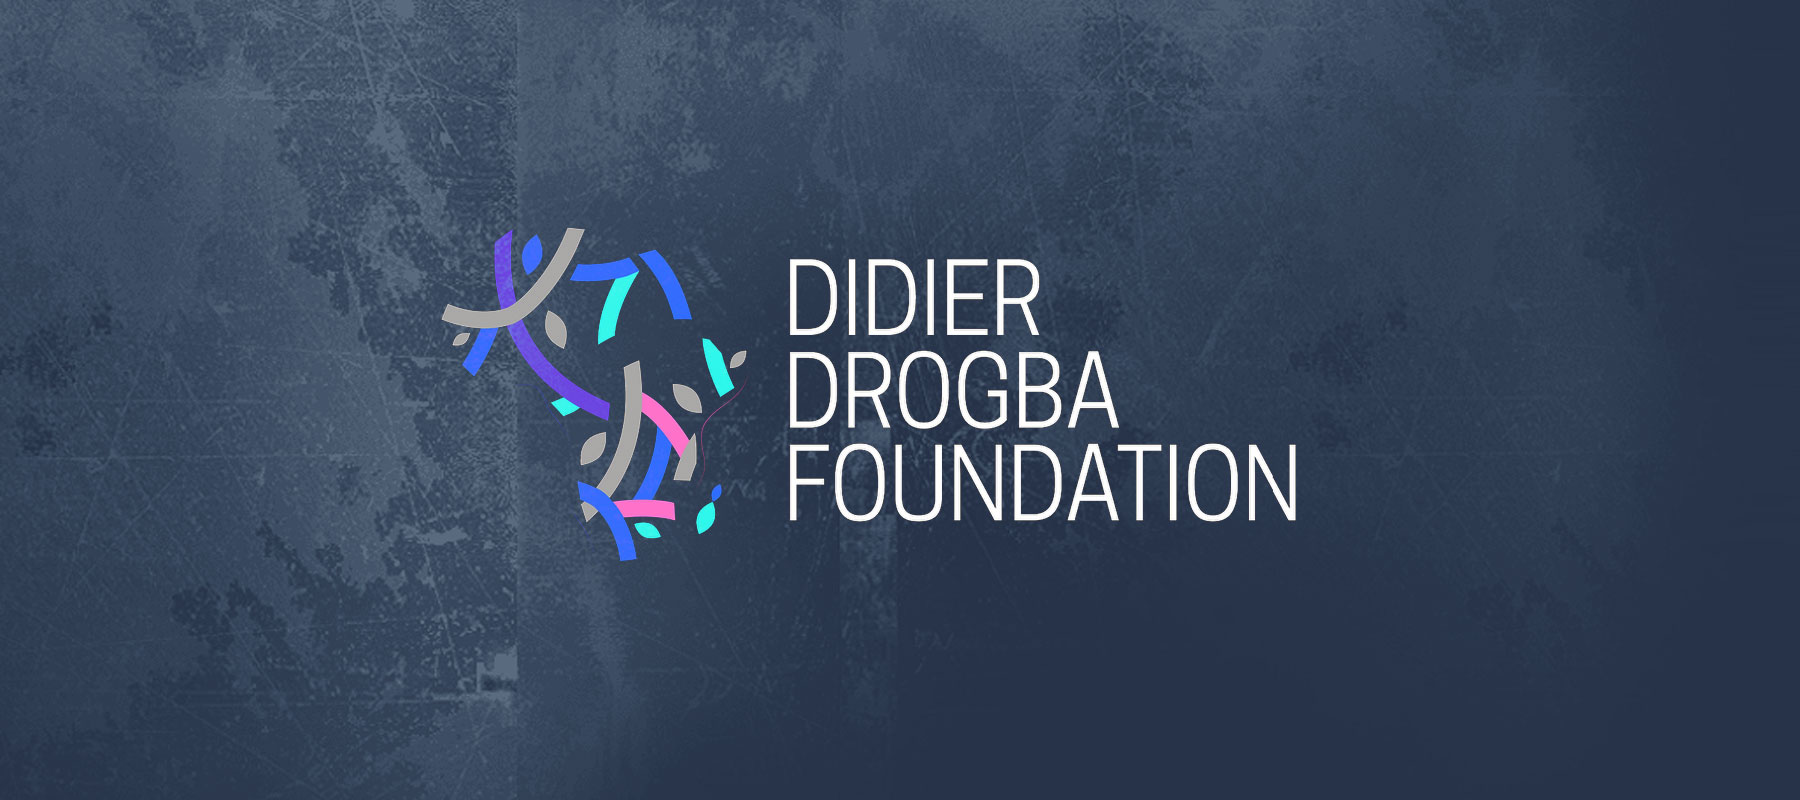 Didier Drogba Foundation